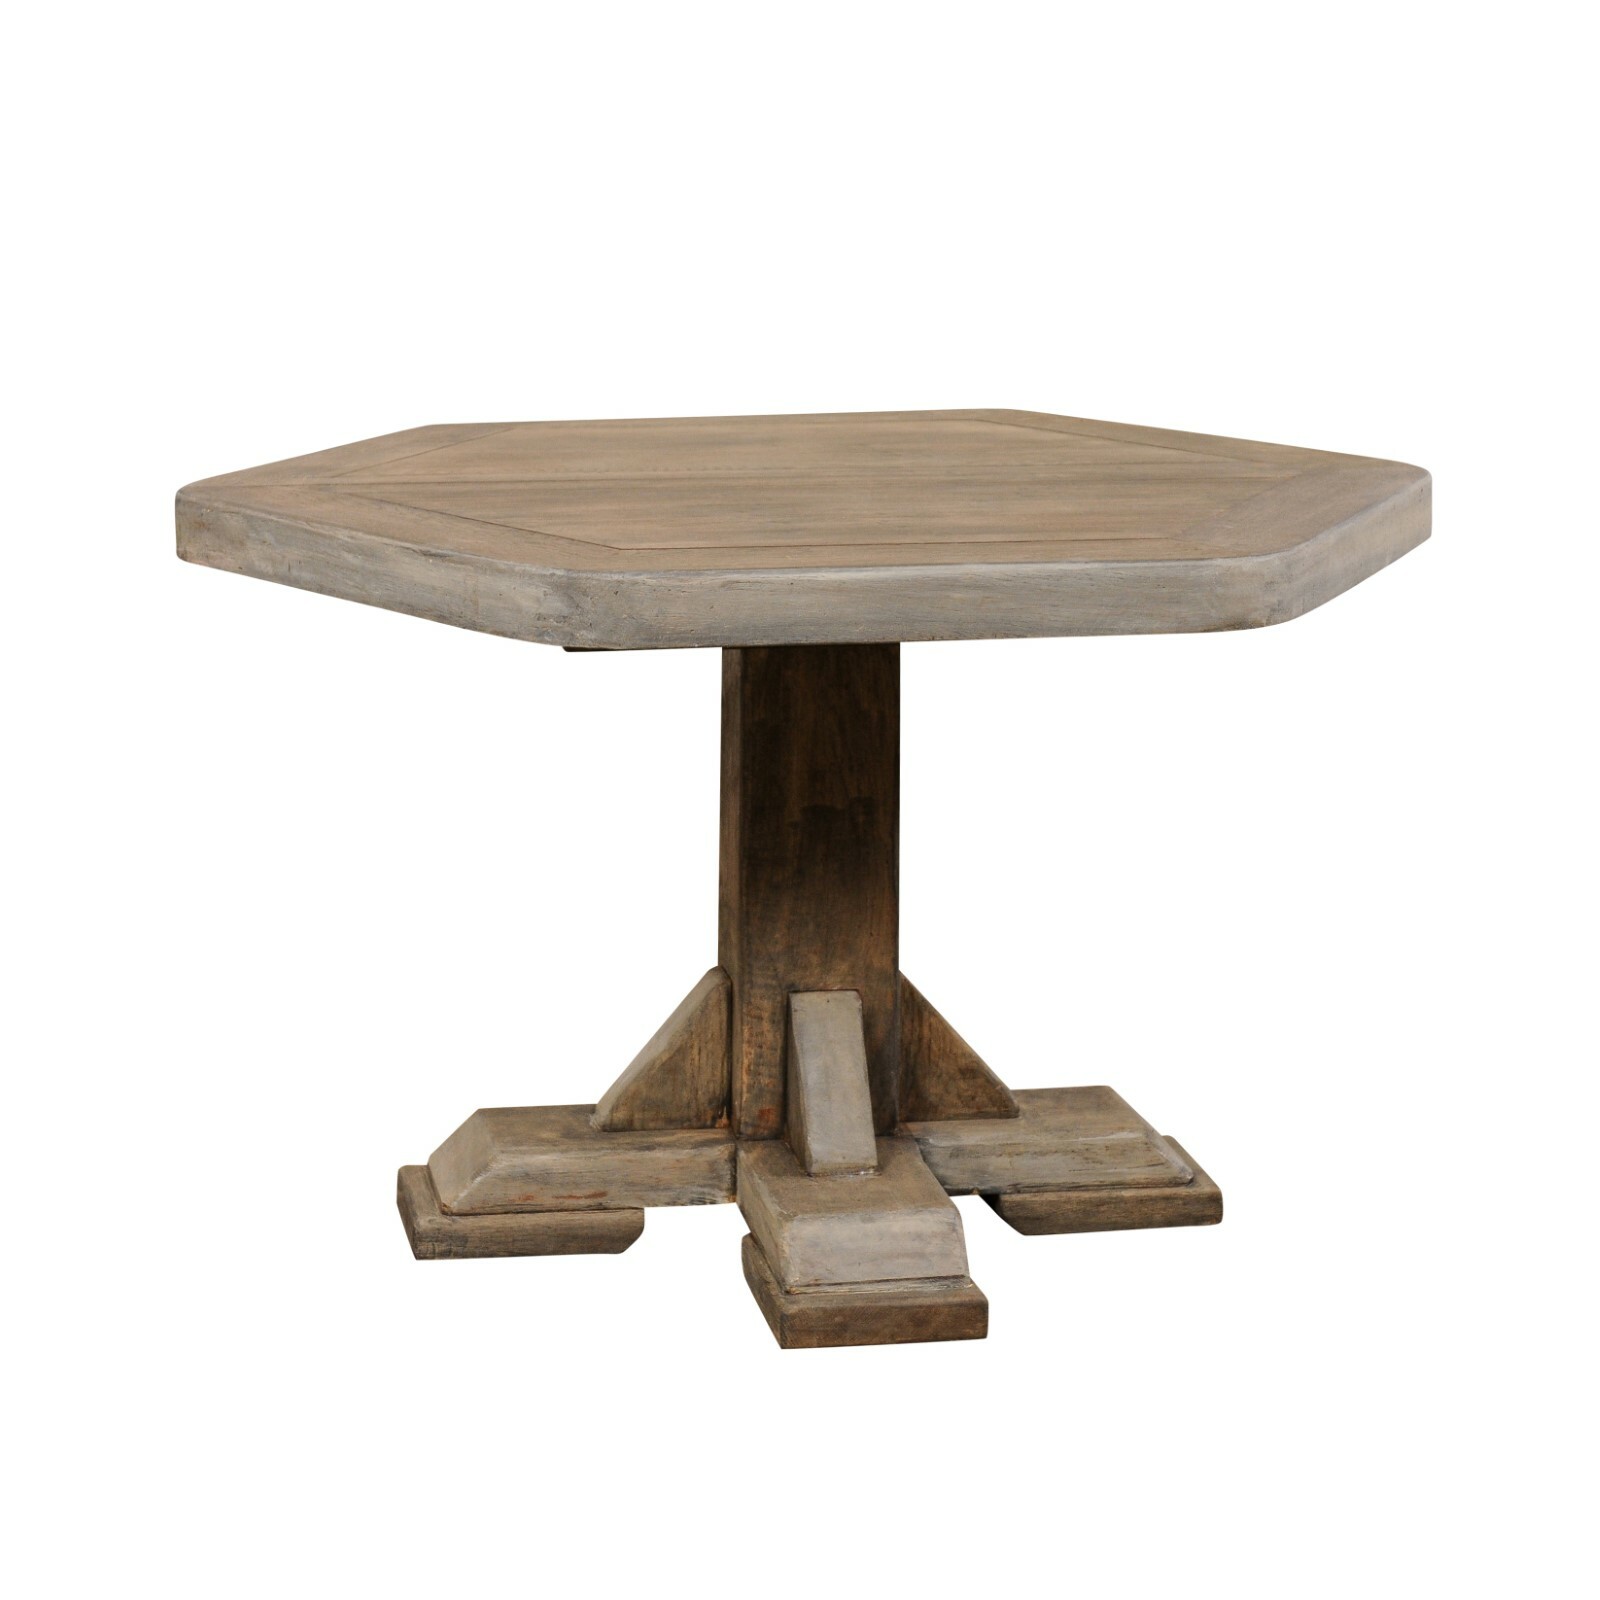 European Hexagonal Wooden Table, Mid 20th c